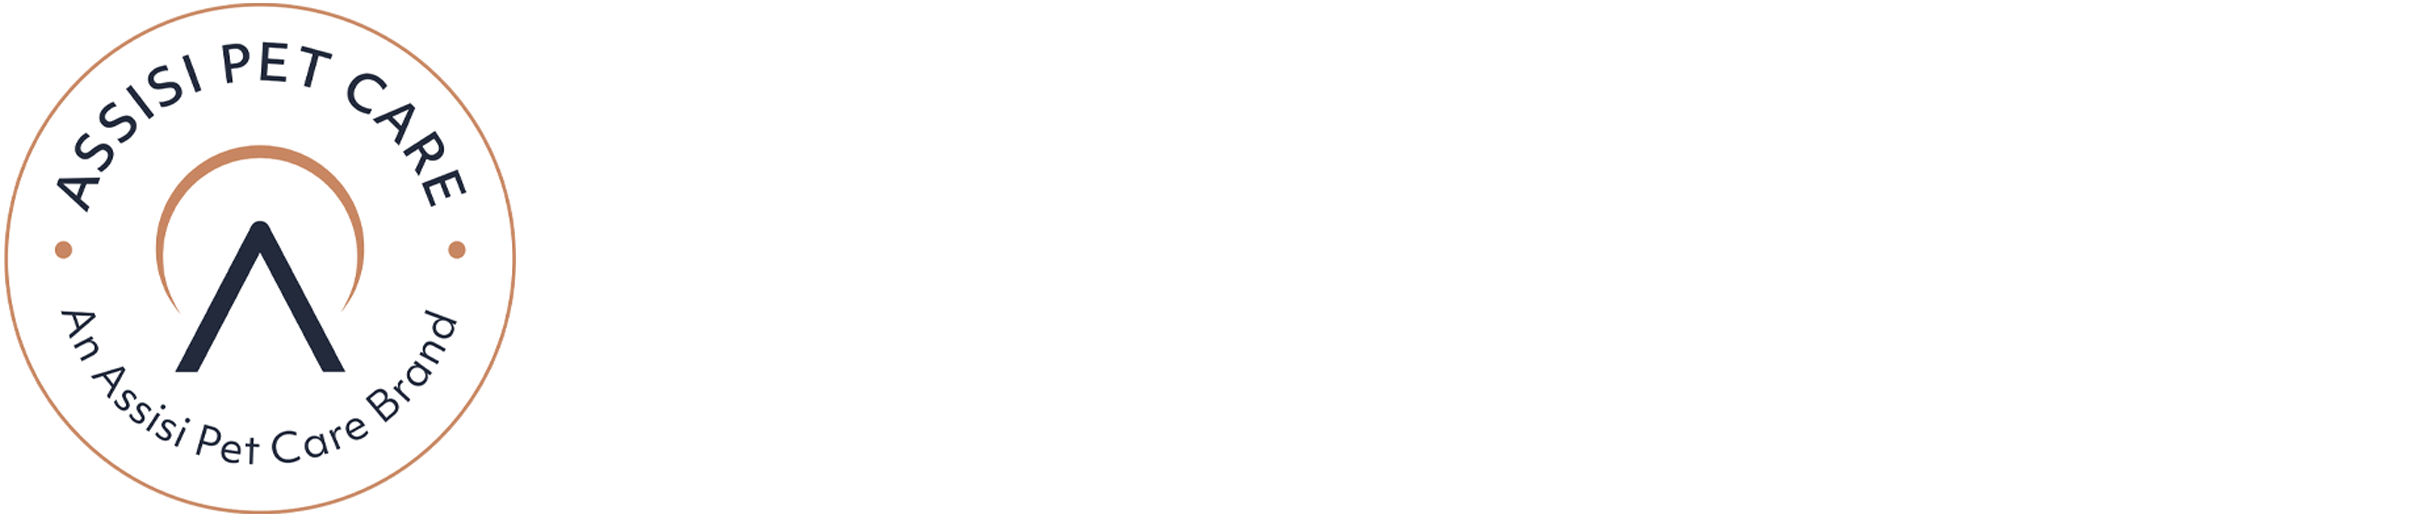 Pet Munchies Chicken Strips Dog Treats 320g